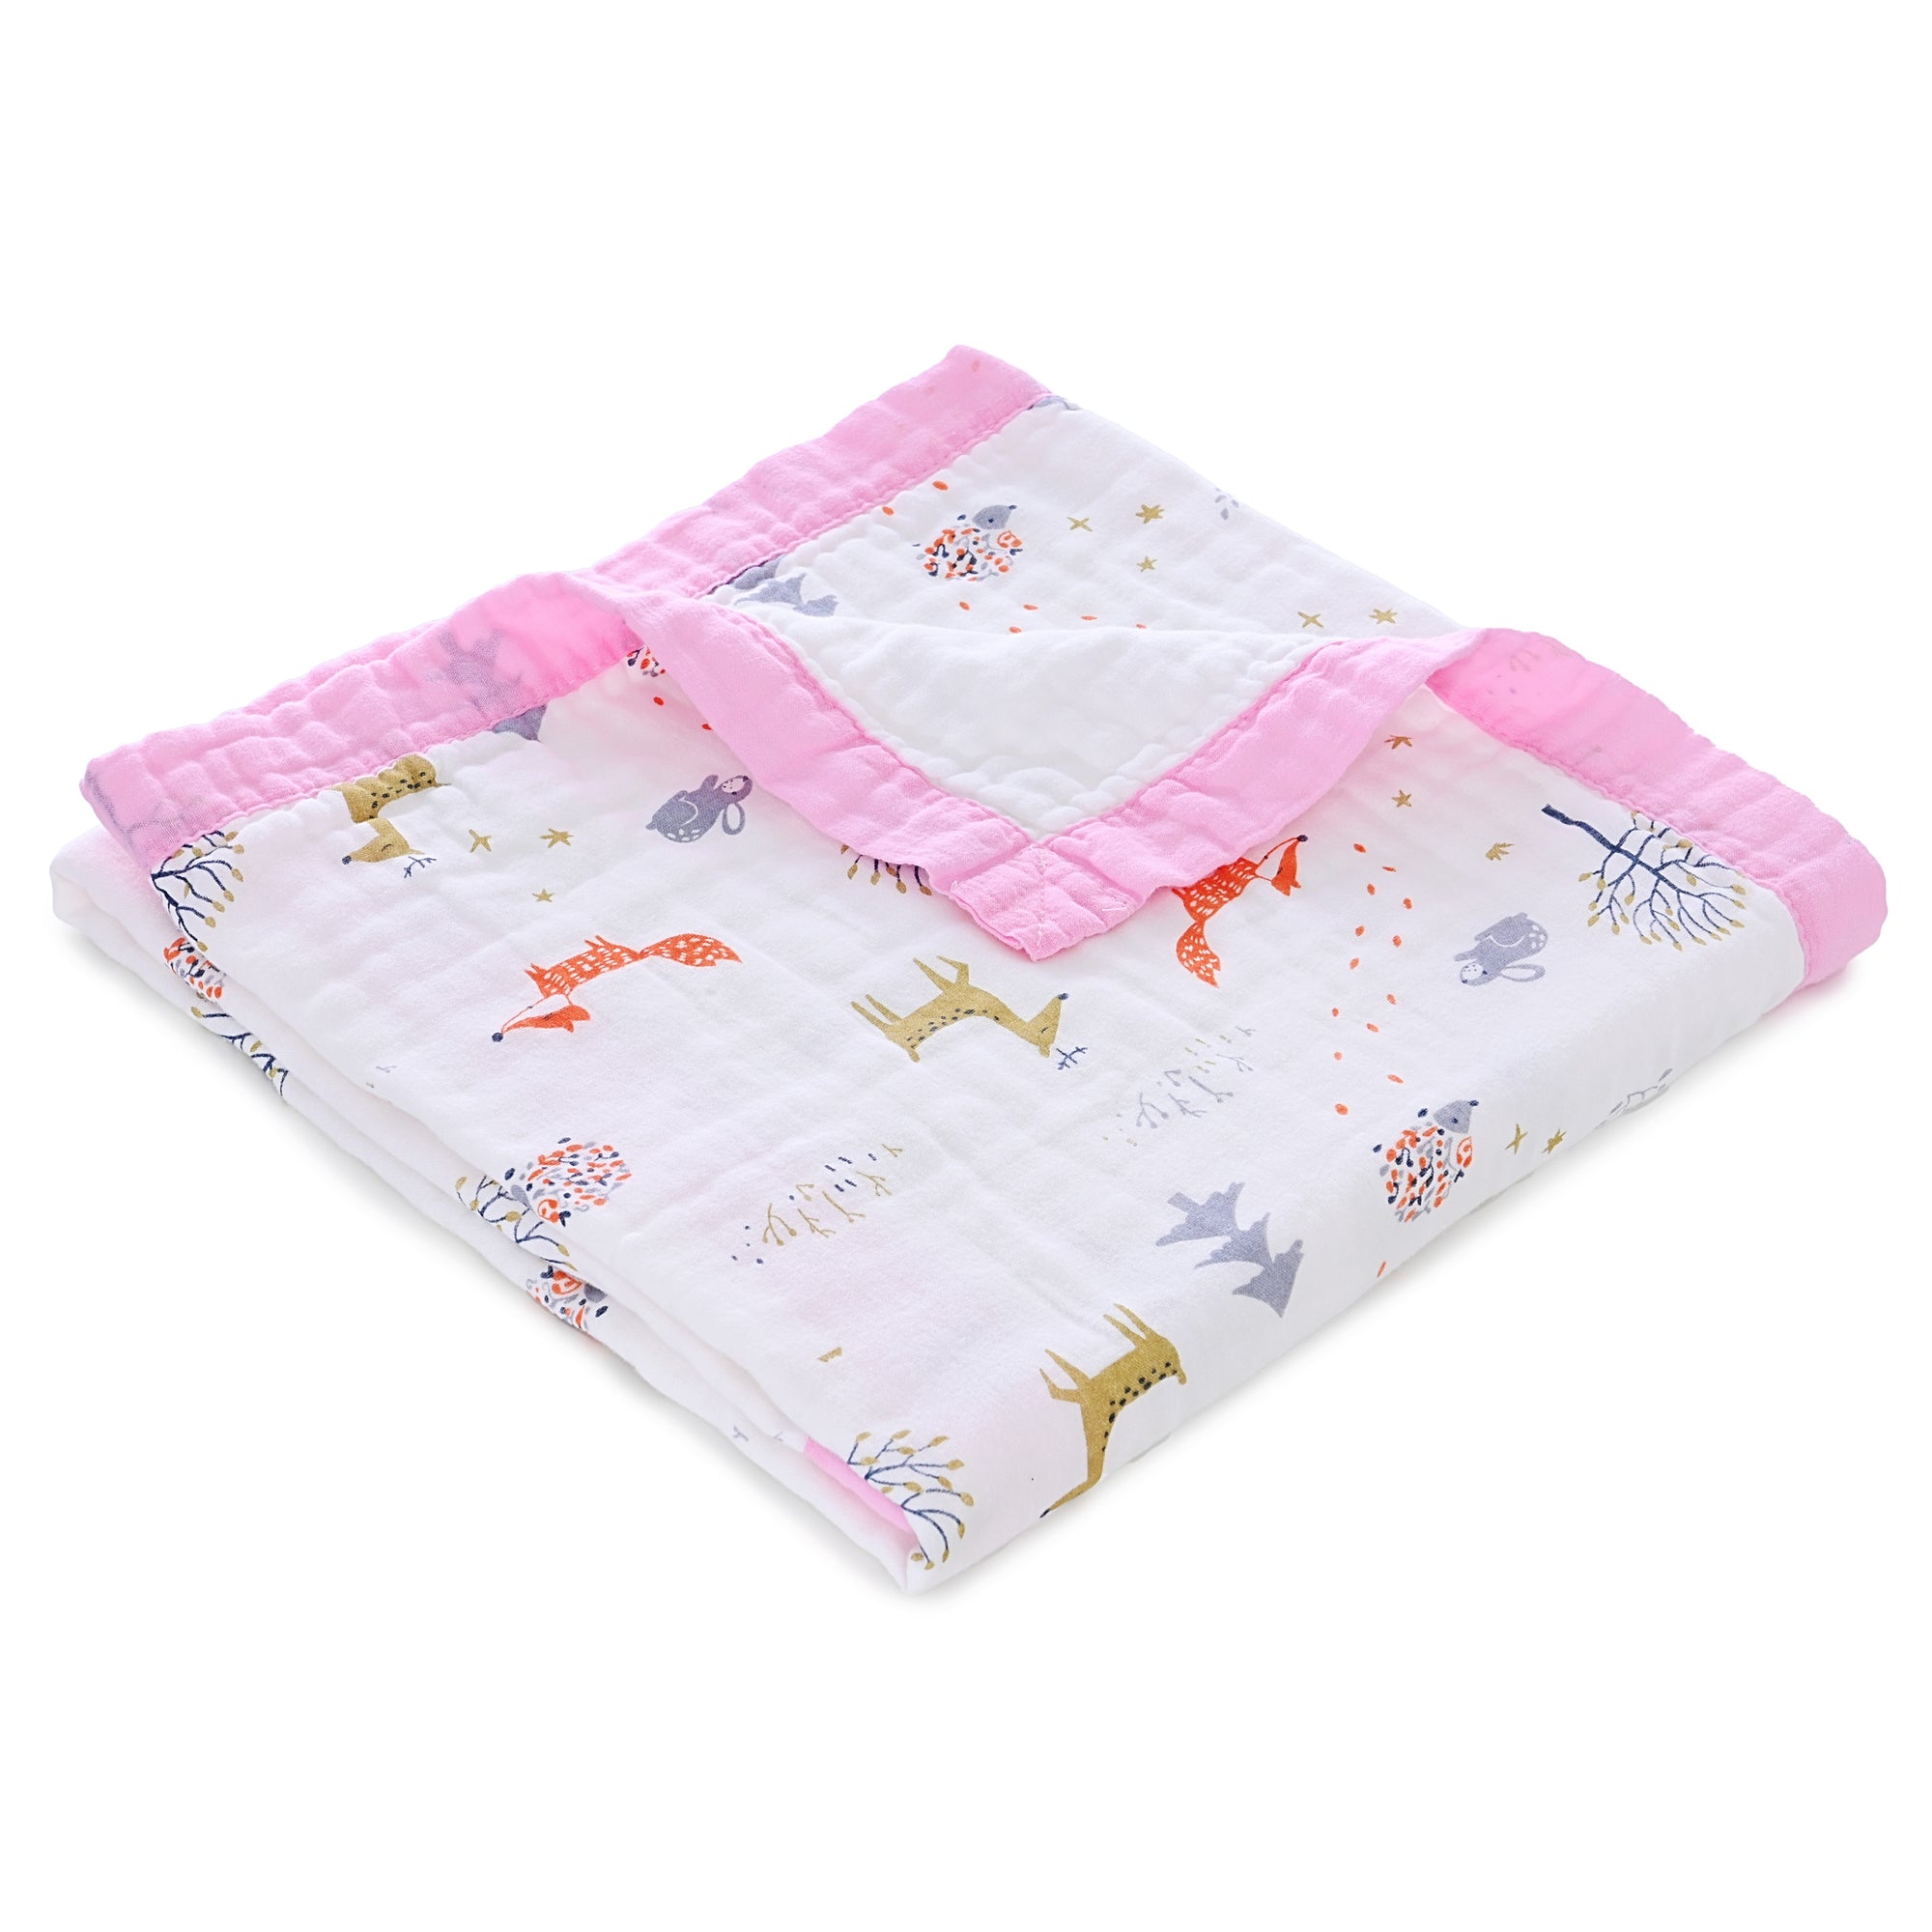 Baby/Toddler Muslin Cotton Blanket - Pink Forest